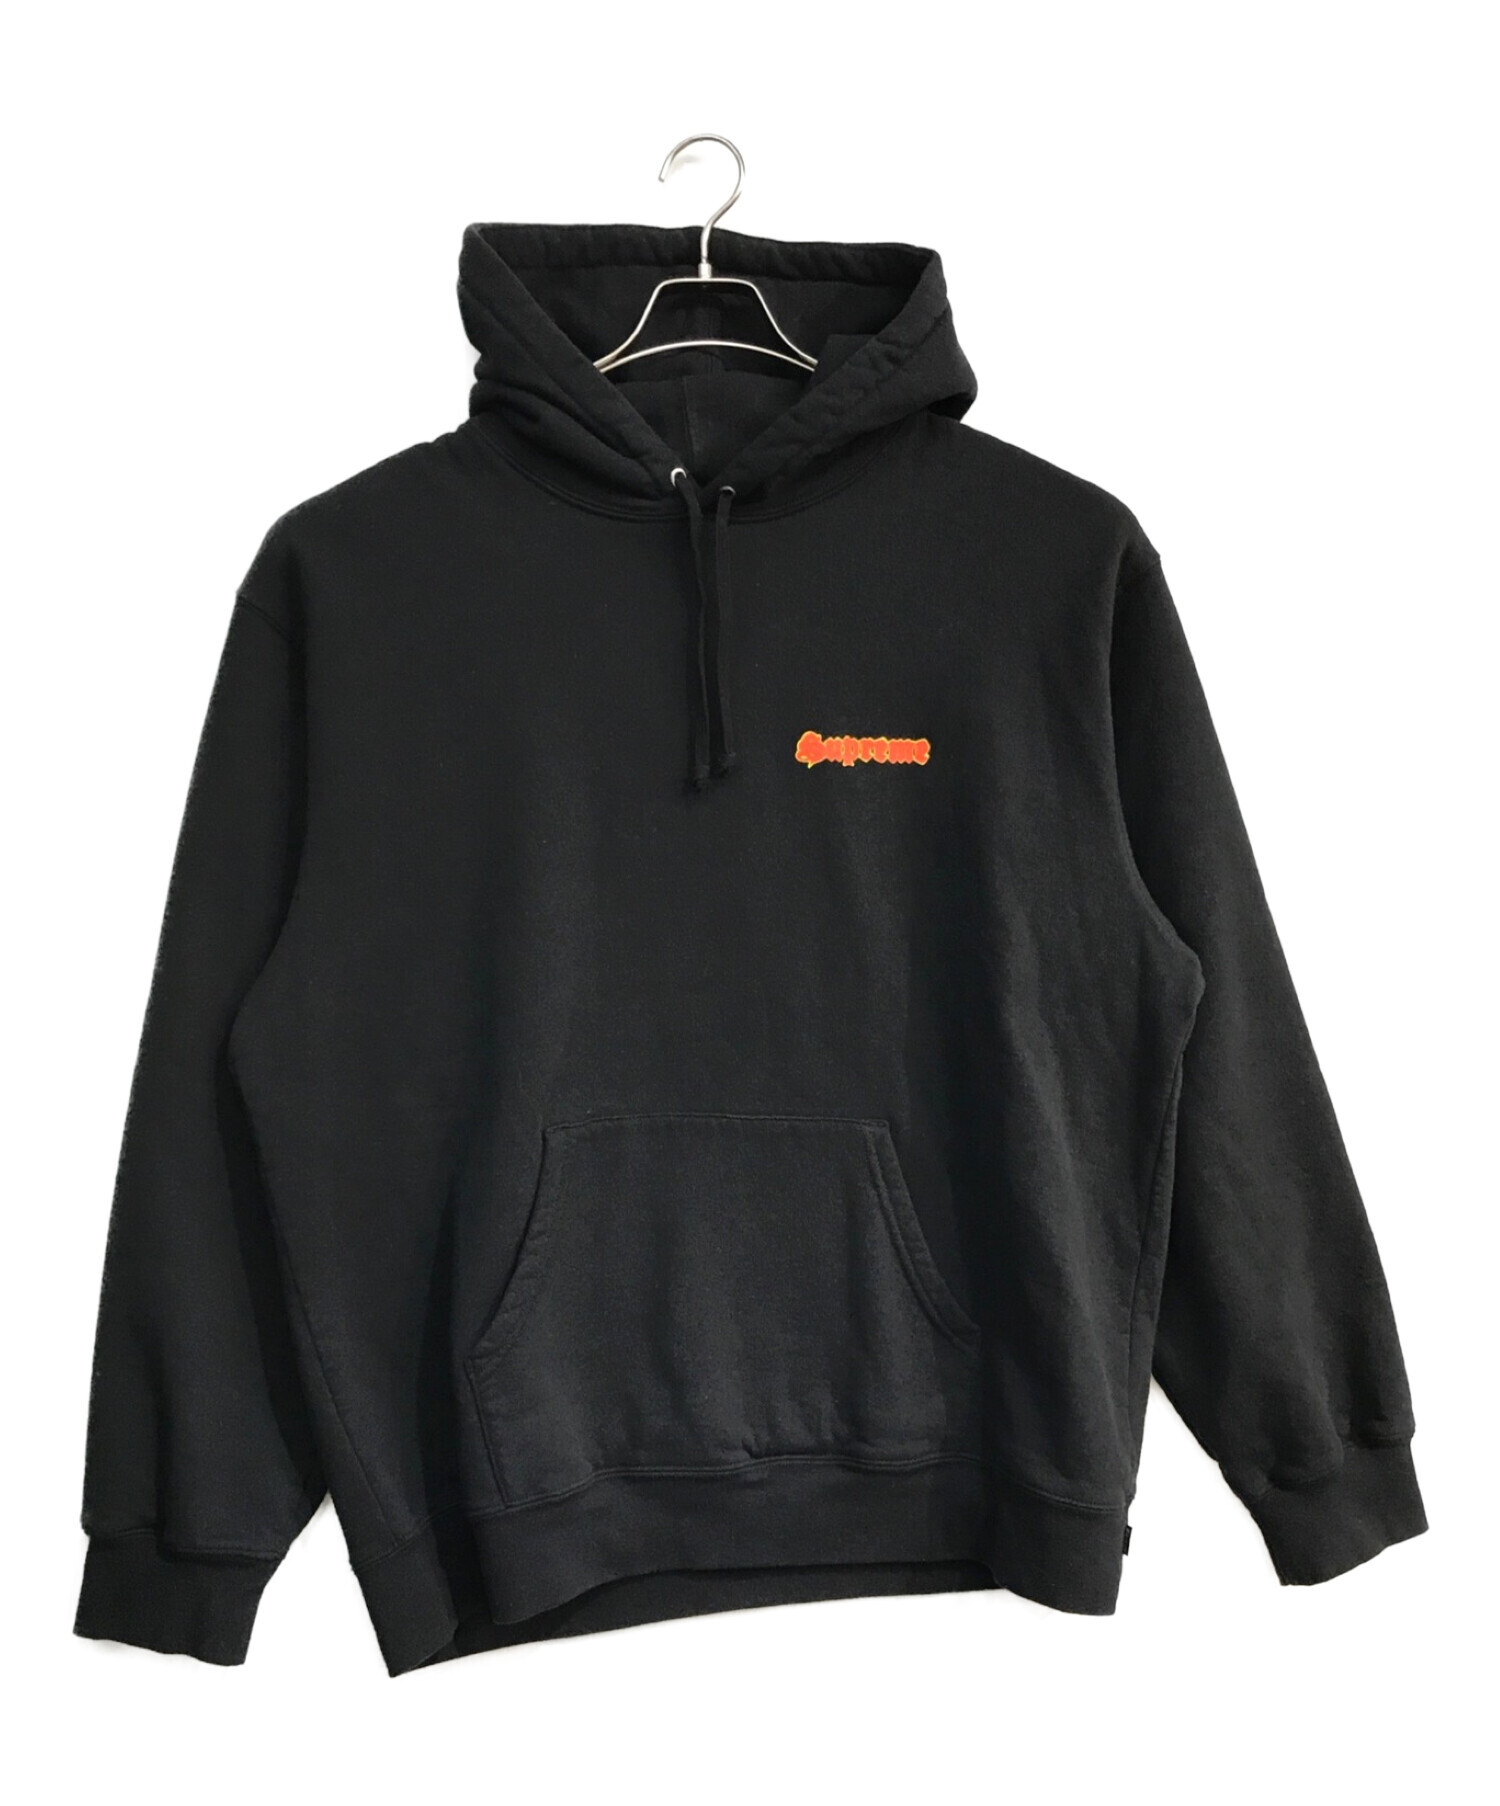 supreme 黒hoodie